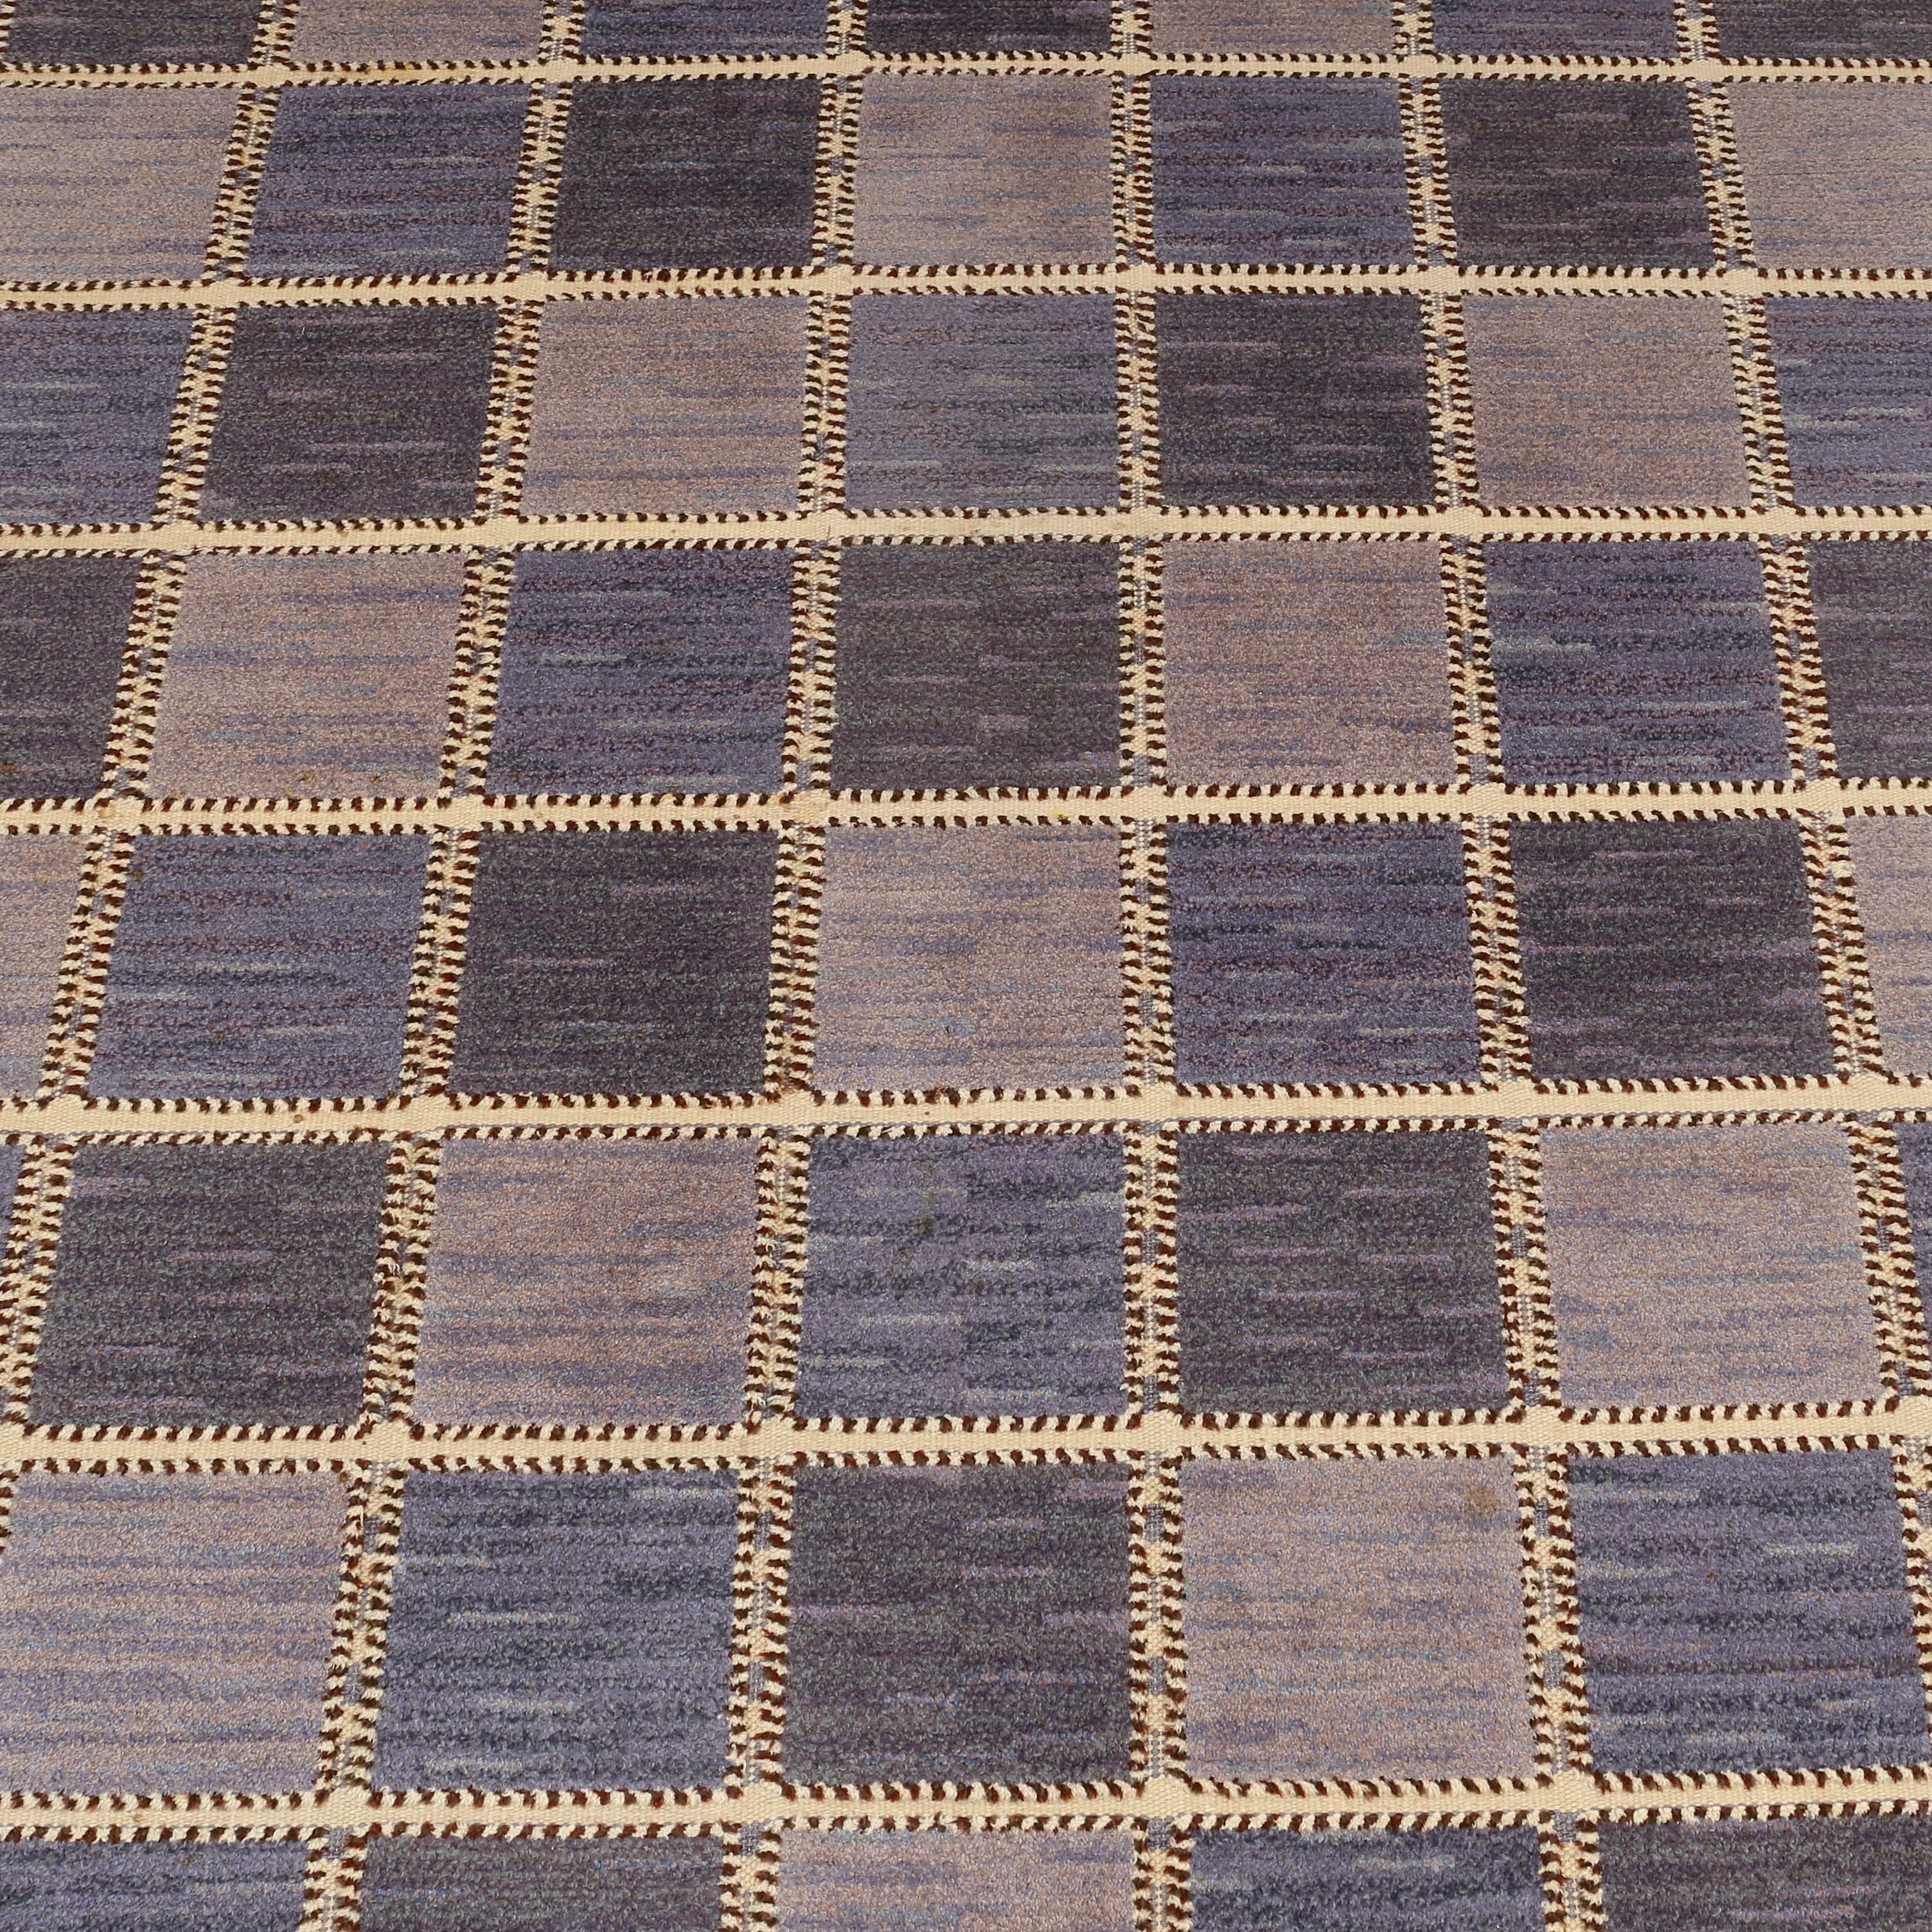 Large Barbro Nilsson 'Gyllenrutan, blå' (The Golden Square, blue)' carpet. Designed 1945. Handwoven wool on a linen warp.

Produced by Märta Måås-Fjetterström AB, Båstad. Carpet with manufacturer’s mark AB MMF and artist’s initials